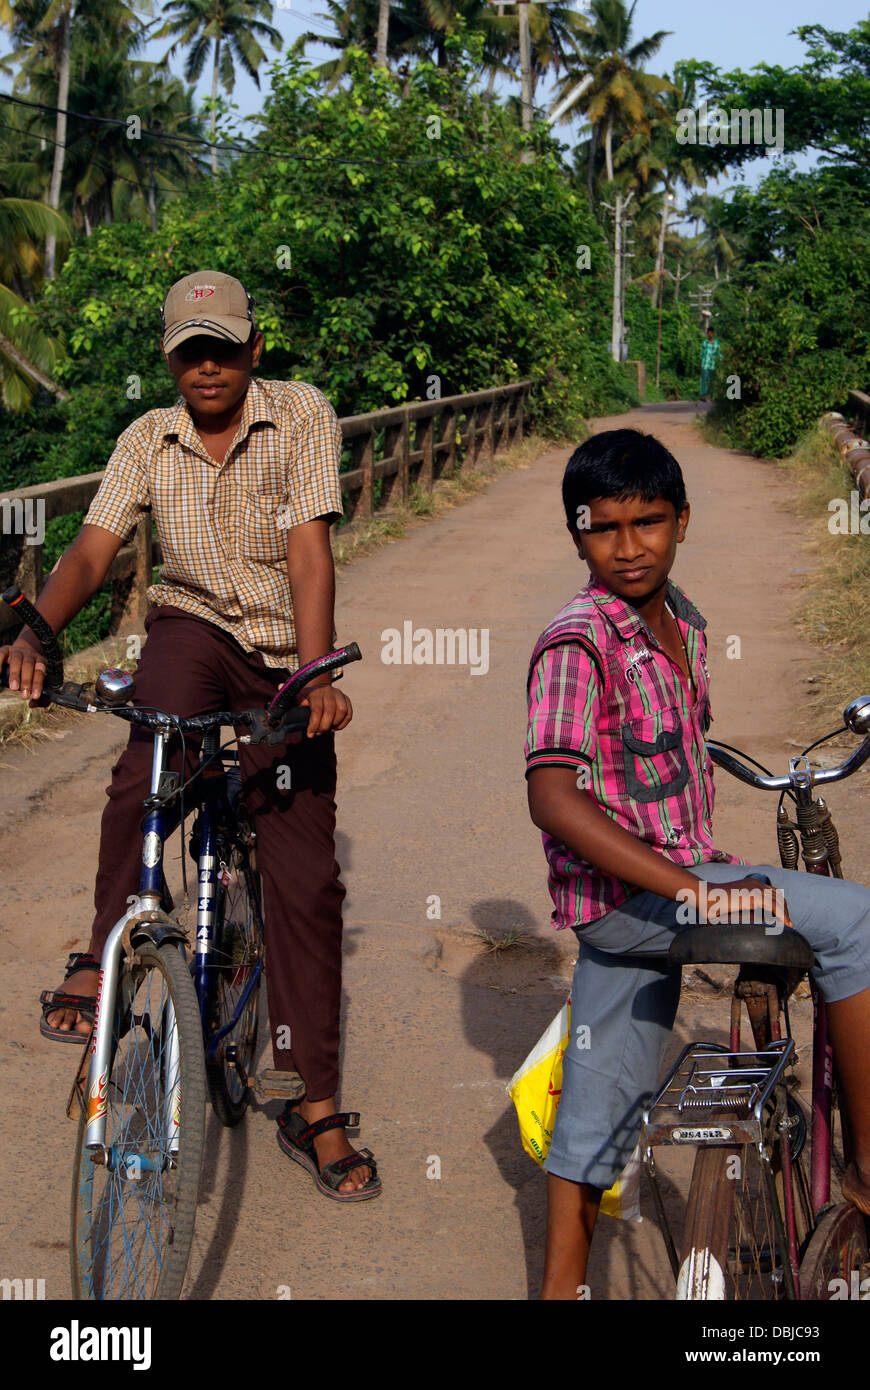 Village Boys auf Zyklen in Kerala Indien Stockfoto